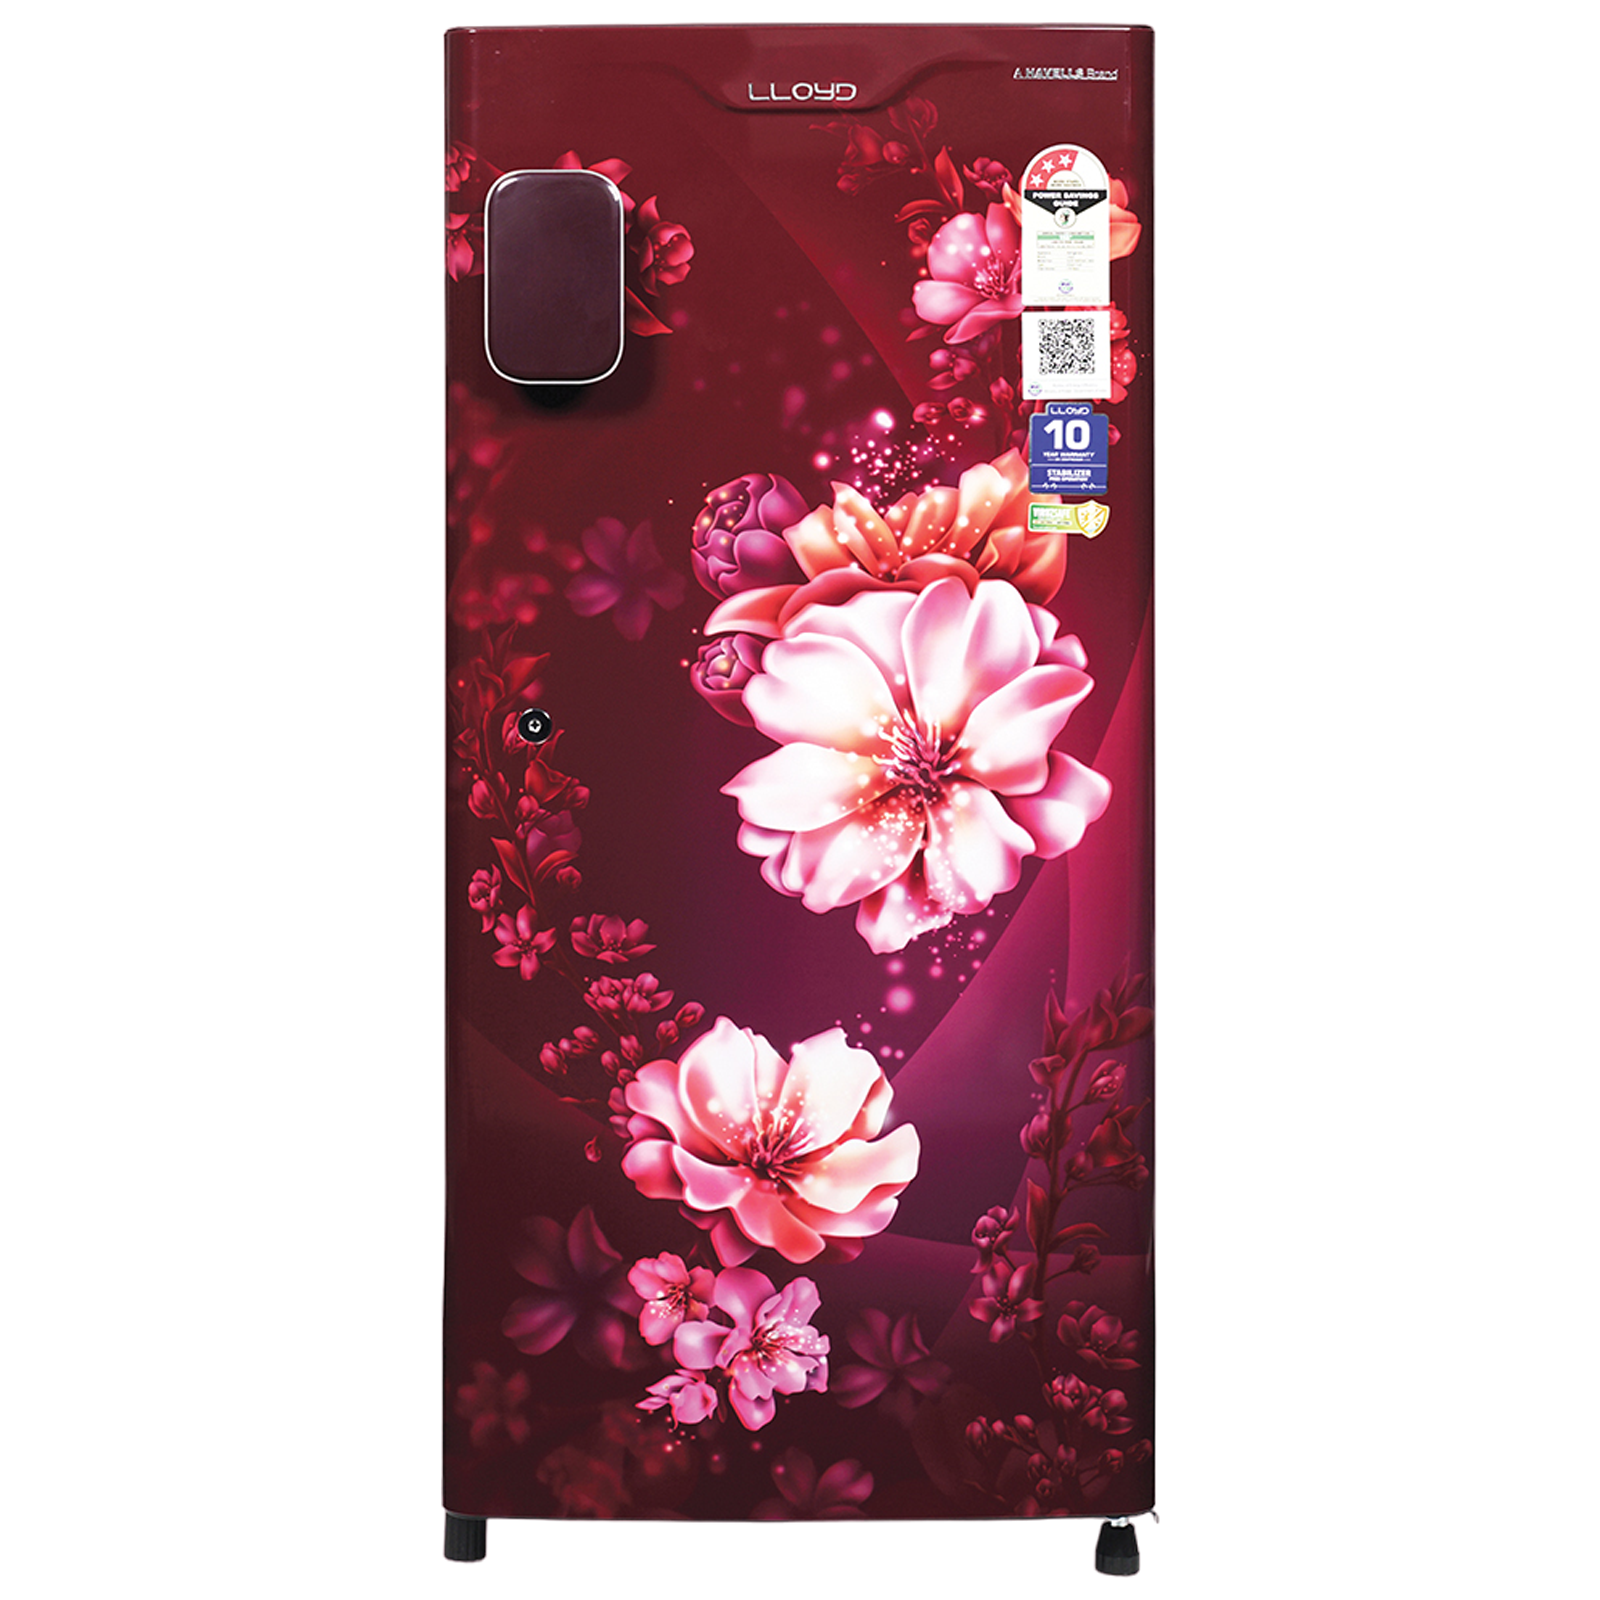 LLOYD 188 Litres 3 Star Direct Cool Single Door Refrigerator with Bactsheild Technology (GLDC203ST4JC, Cherry Blossom Wine)